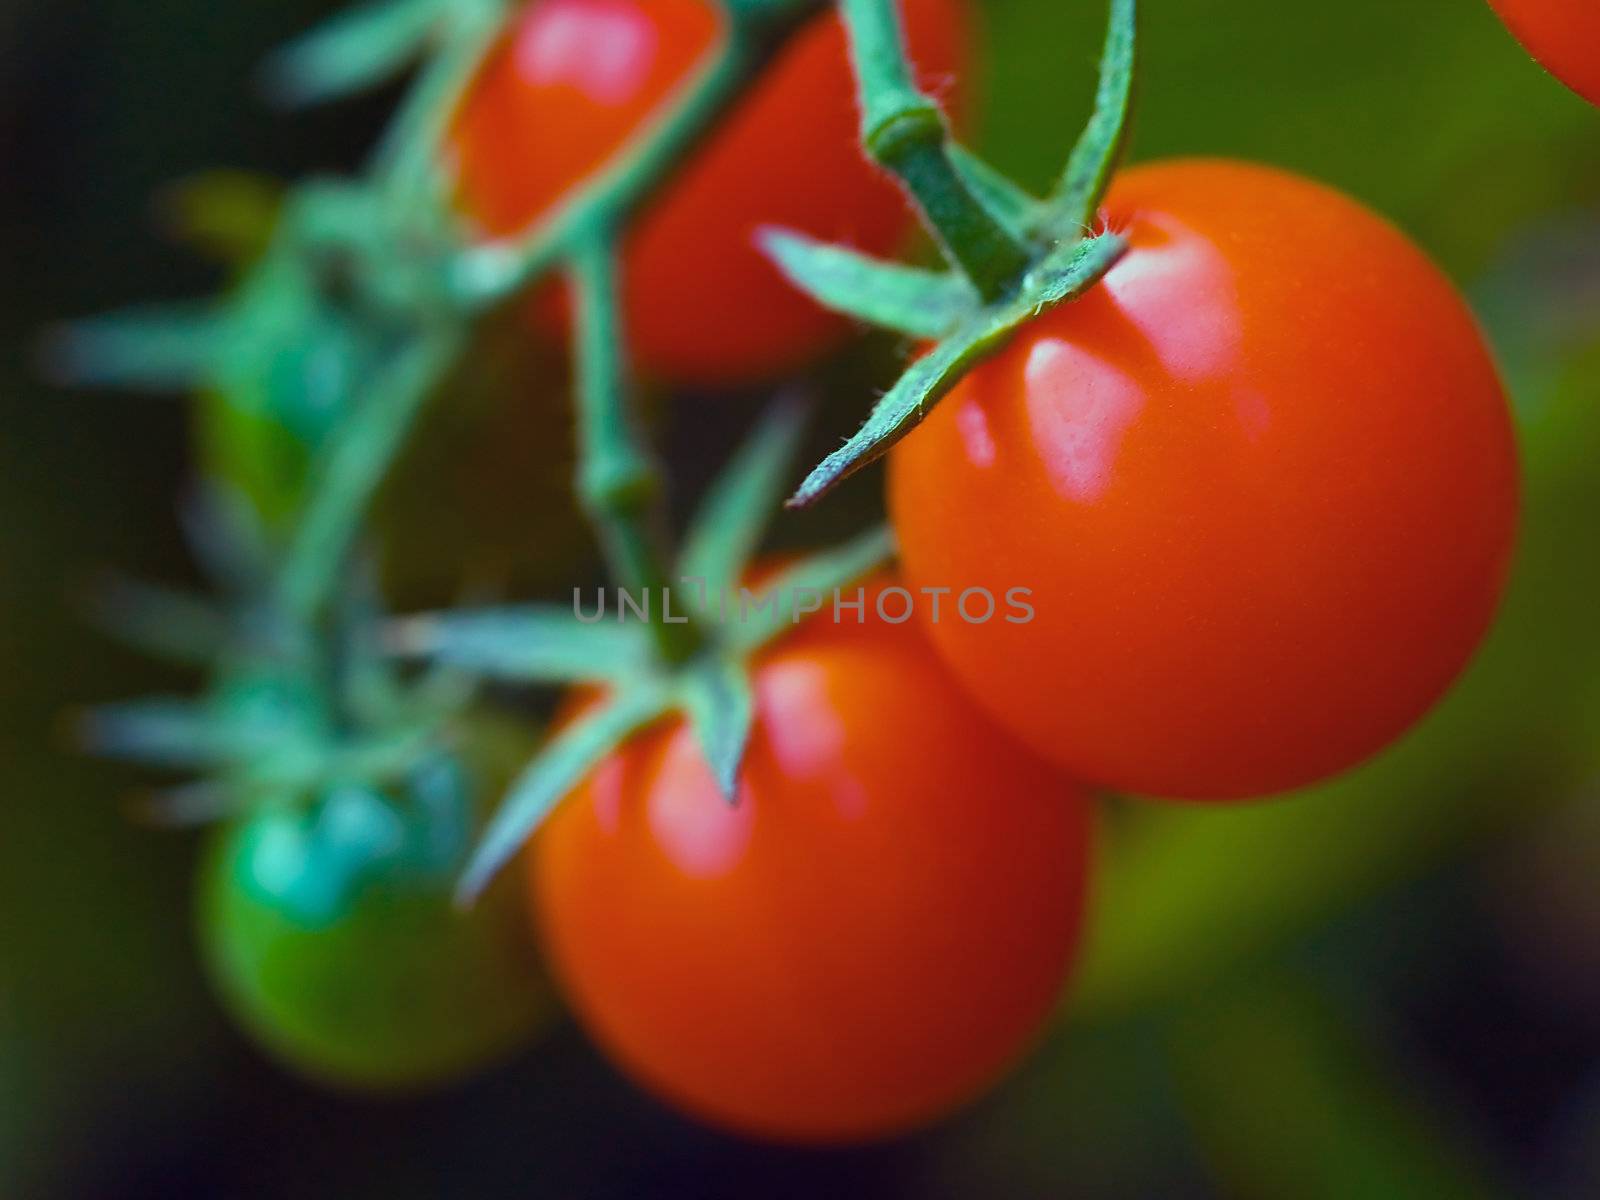 Tomatoes on the Vine by Frankljunior